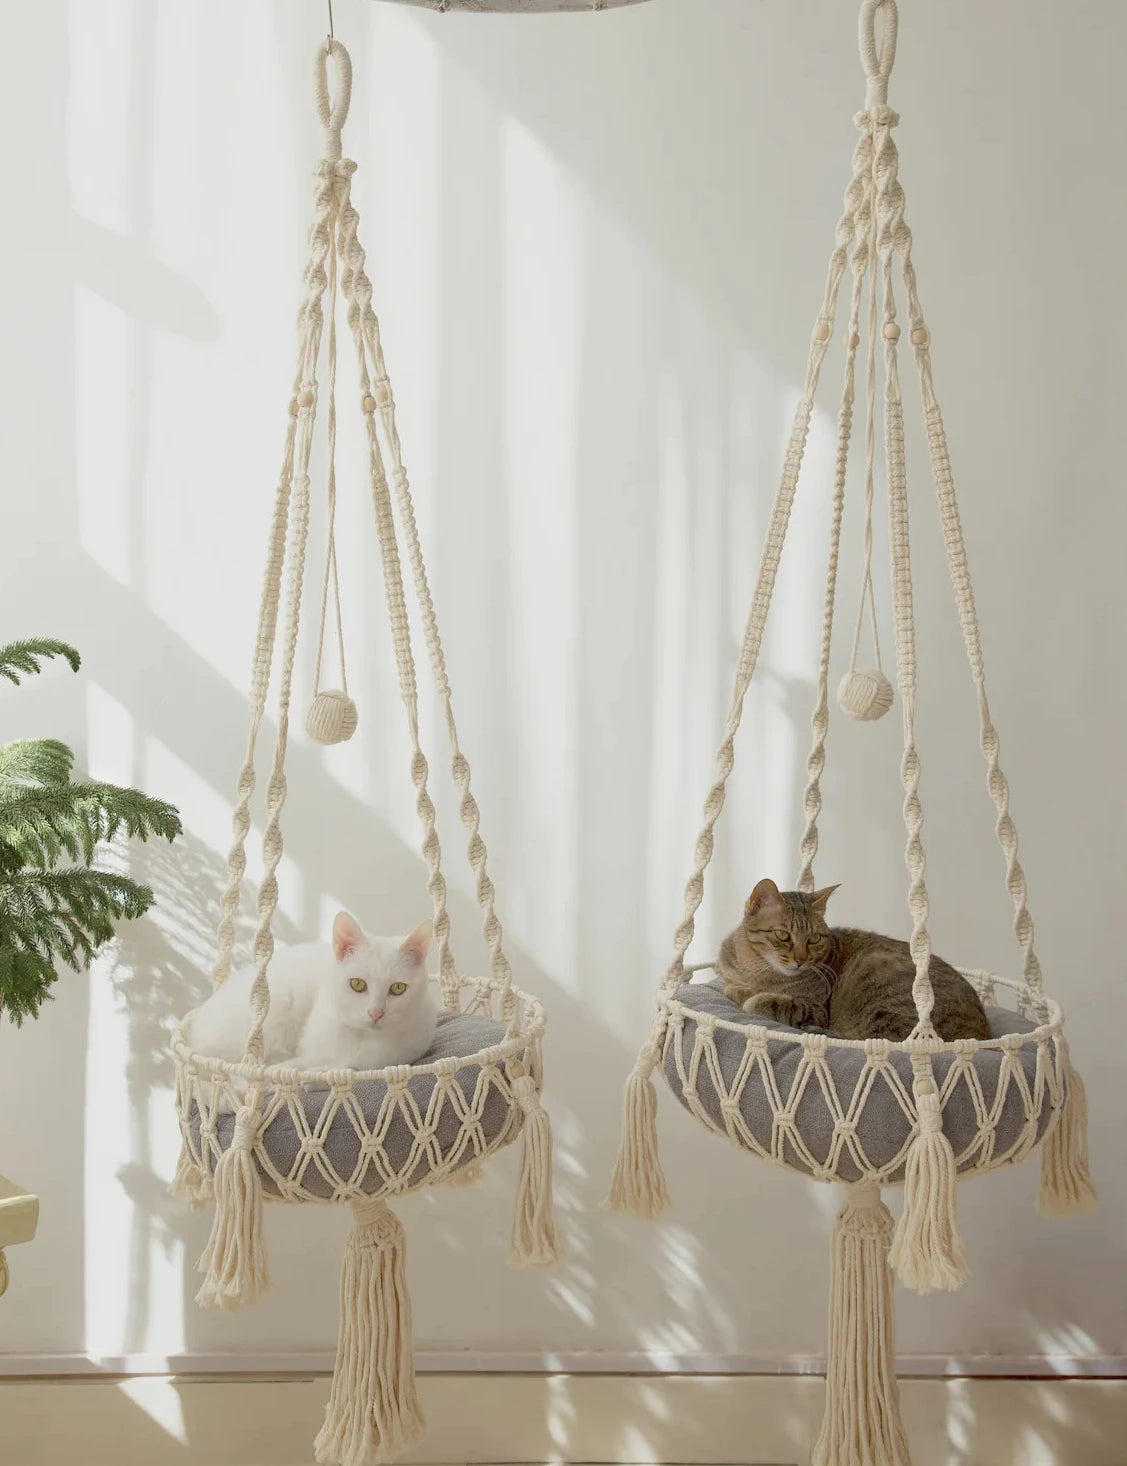 Big 40x120cm Cat Hammock Window Macrame Cute Pet Cat Beds Cat House Tent Kitten Cat Accessories with Cat Toys Collars Balls